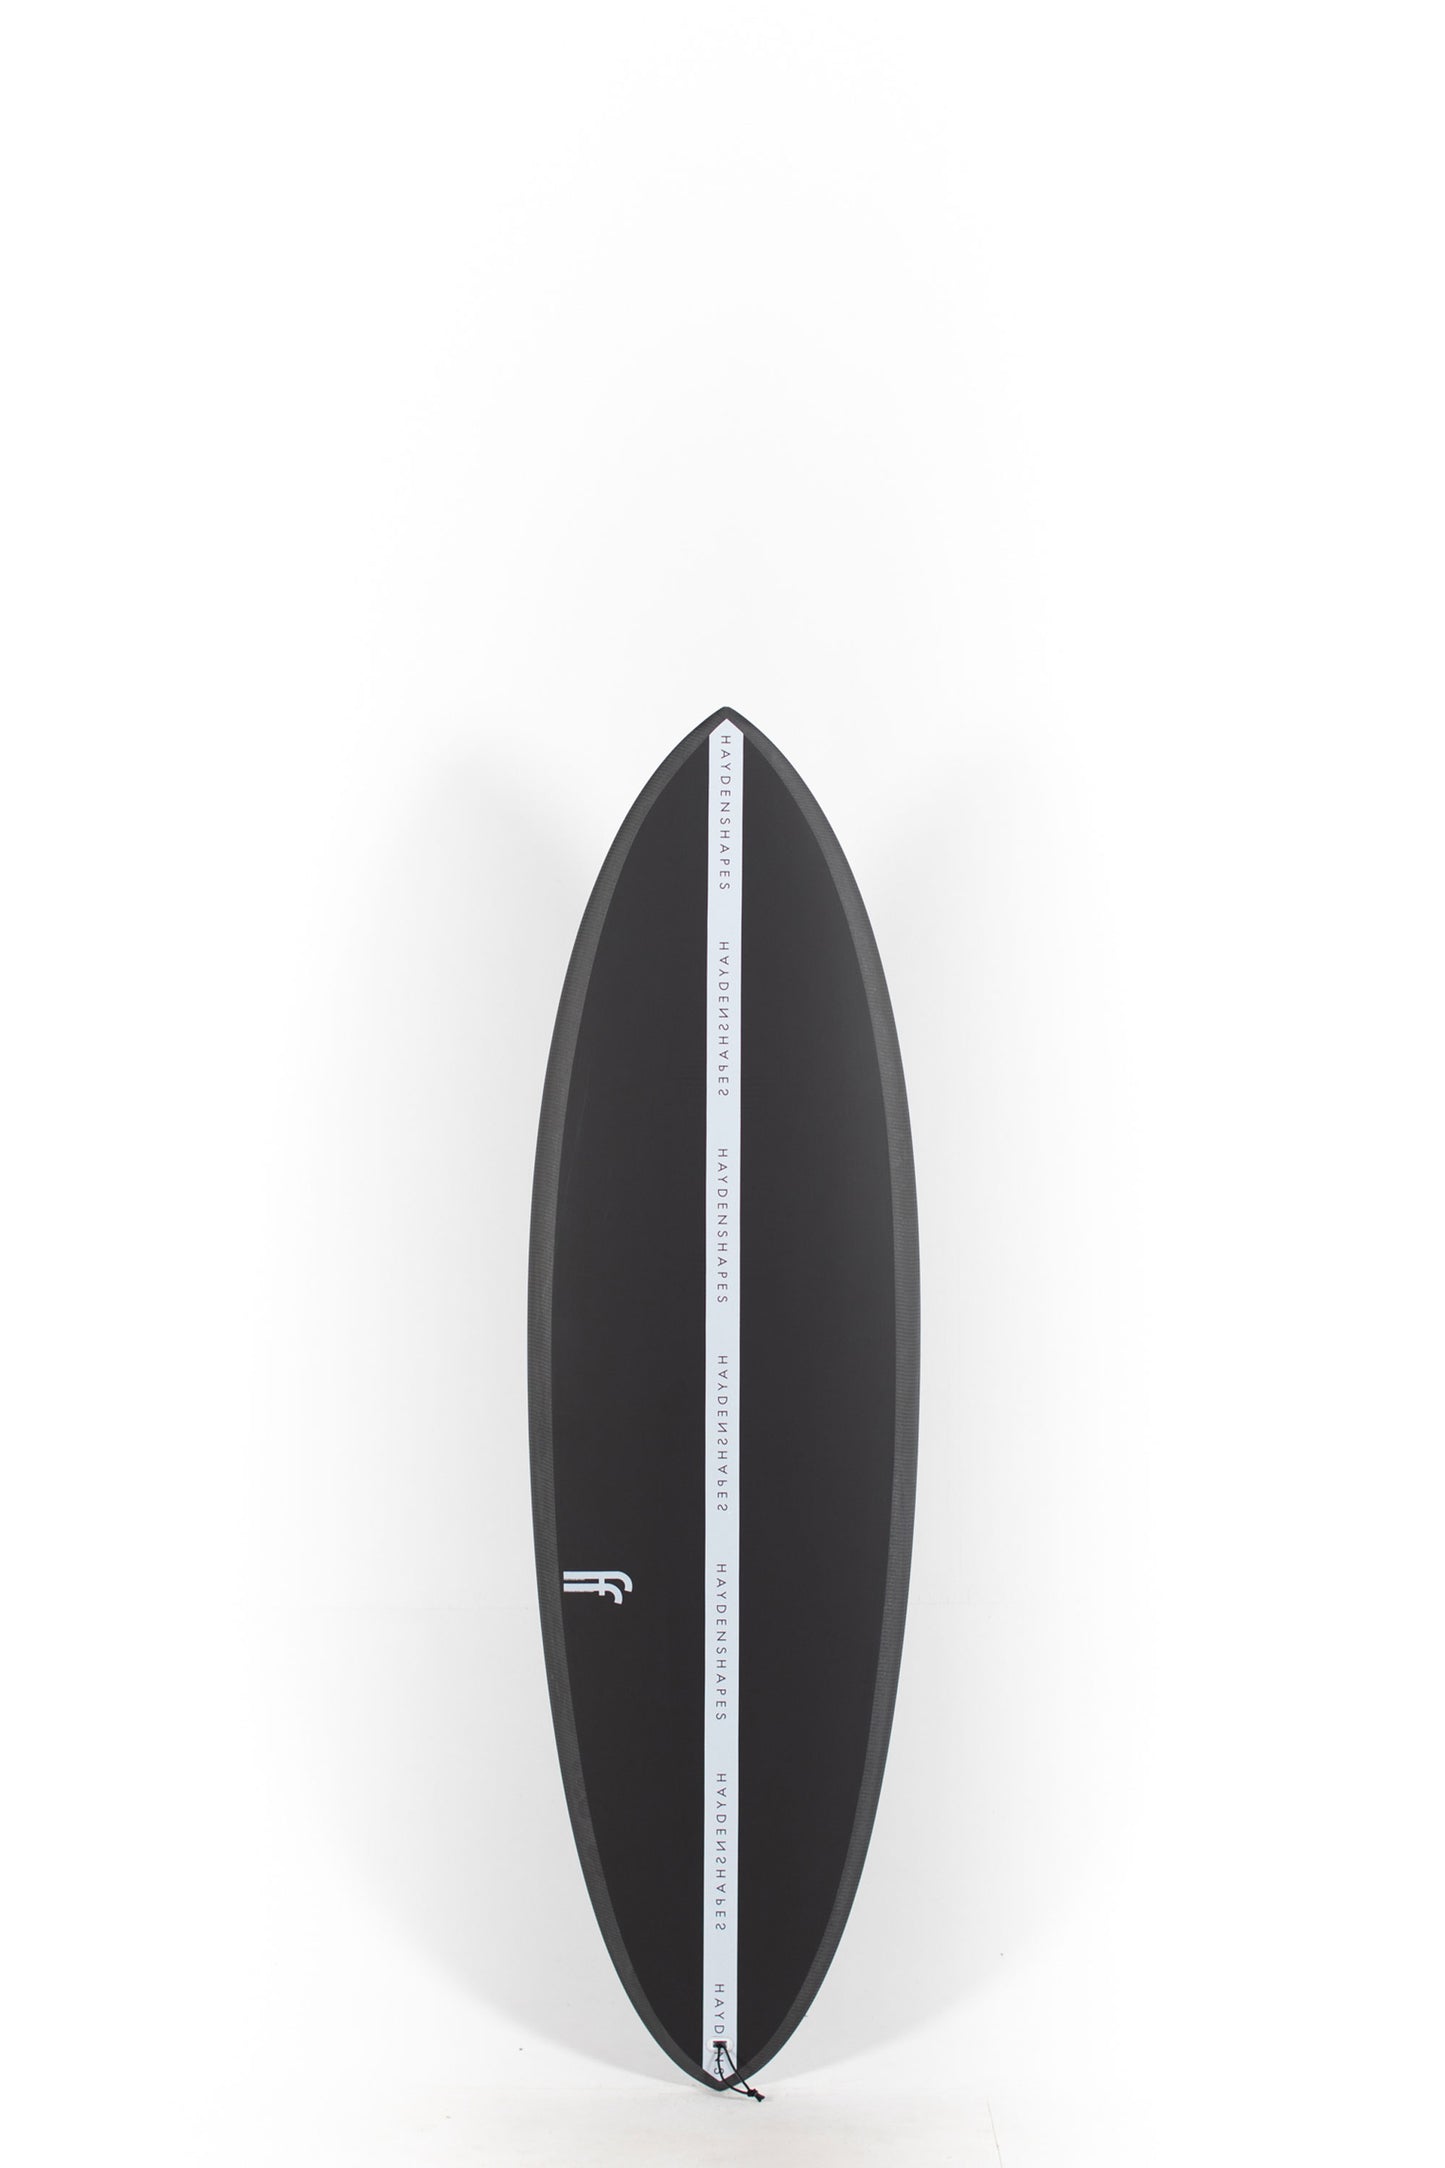 Pukas Surf Shop - HaydenShapes Surfboard - HYPTO KRYPTO FUTUREFLEX - 6'0" x 20 1/2" x 2 3/4" - 36.33L